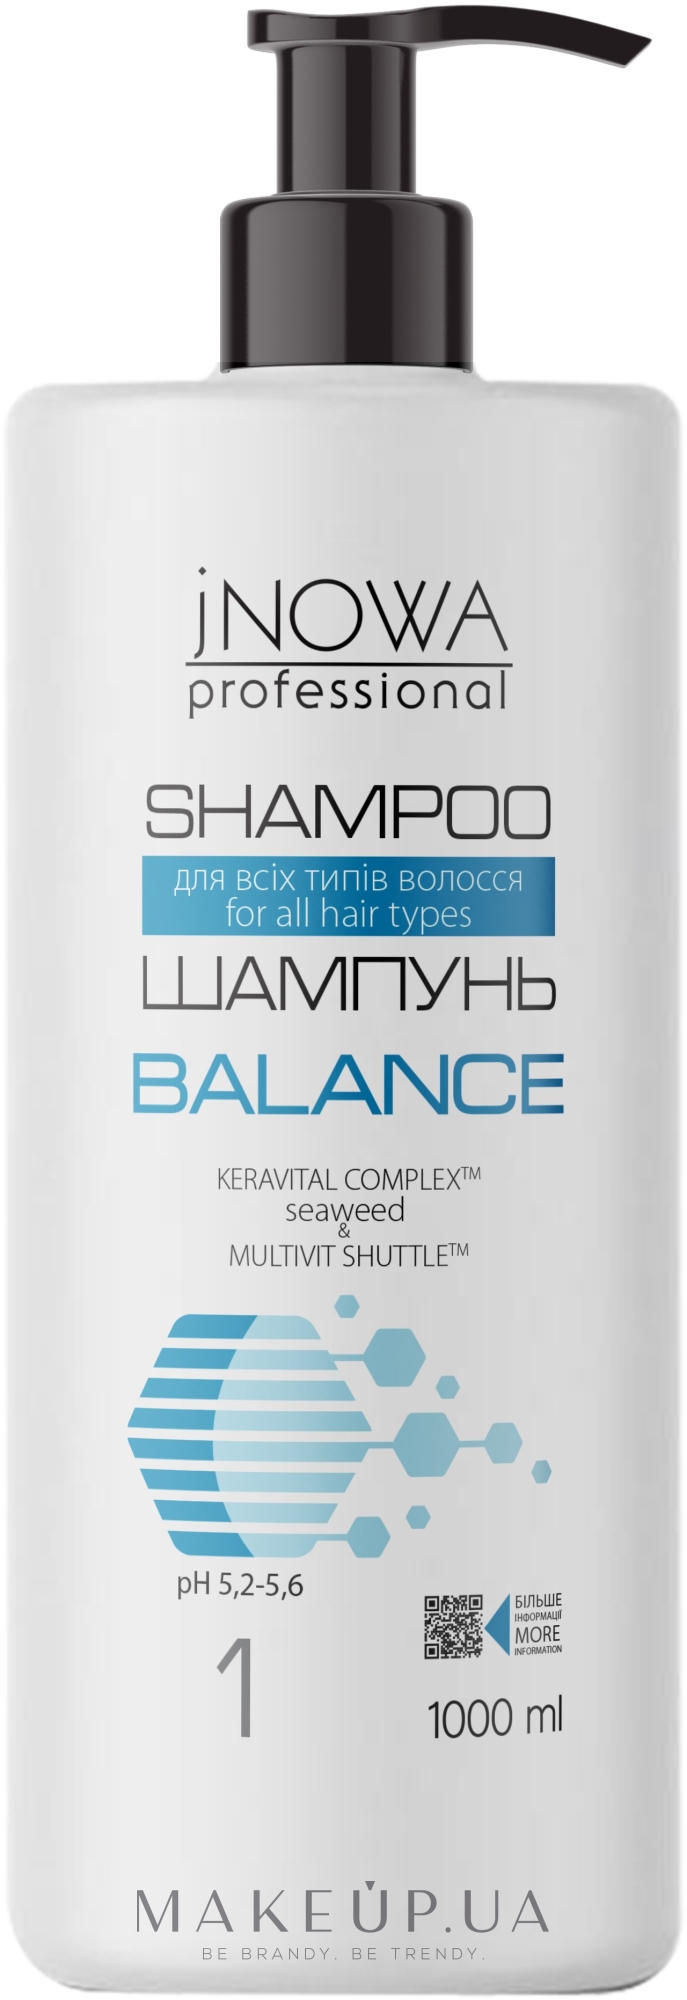 Шампунь для всех типов волос, с дозатором - JNOWA Professional 1 Balance Shampoo — фото 1000ml